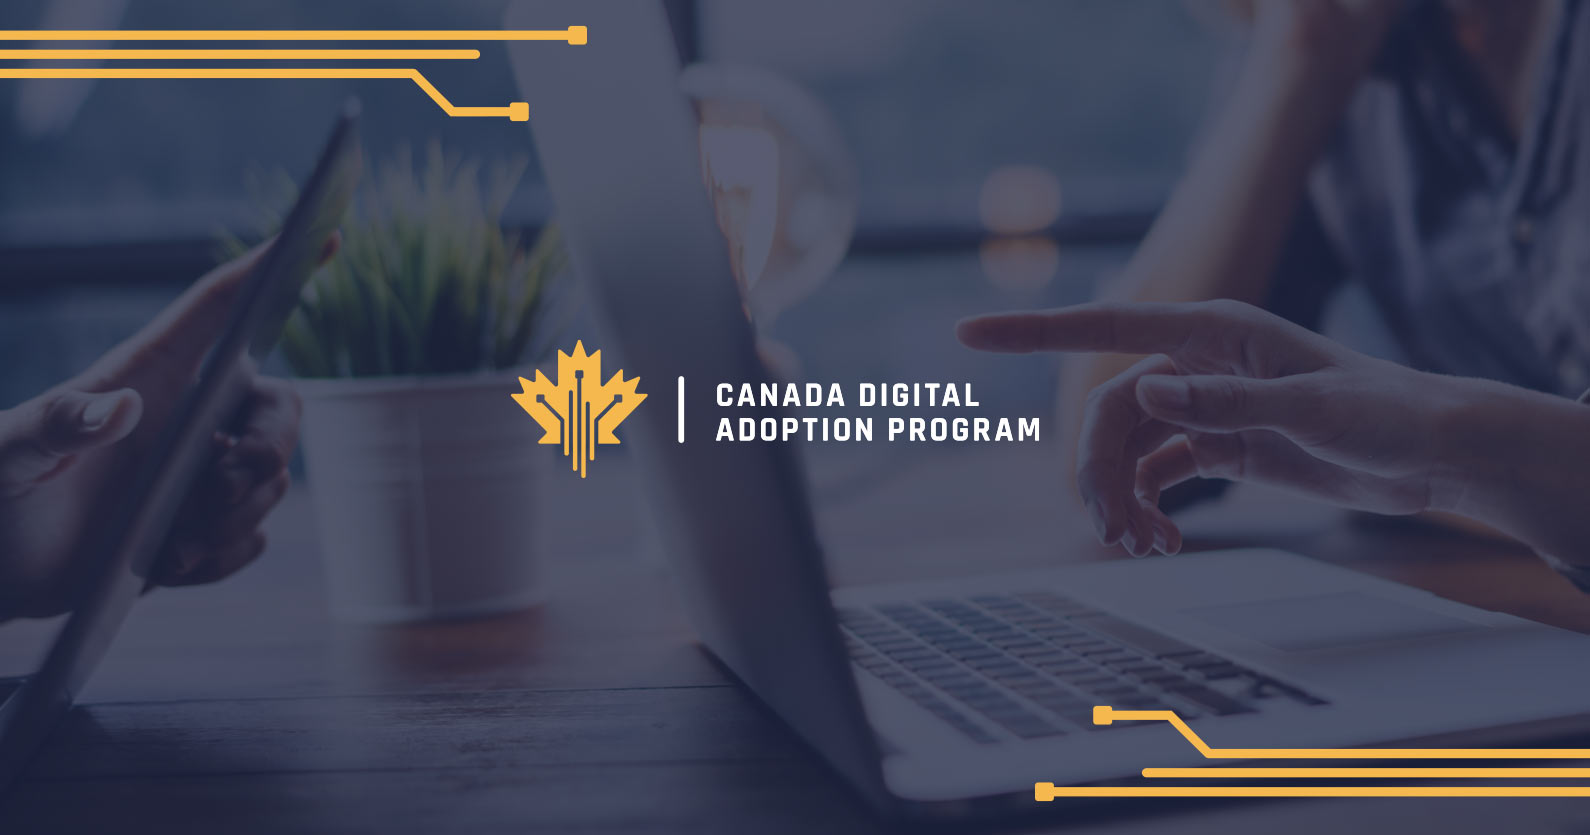 Canada Digital Adoption Program image with logo